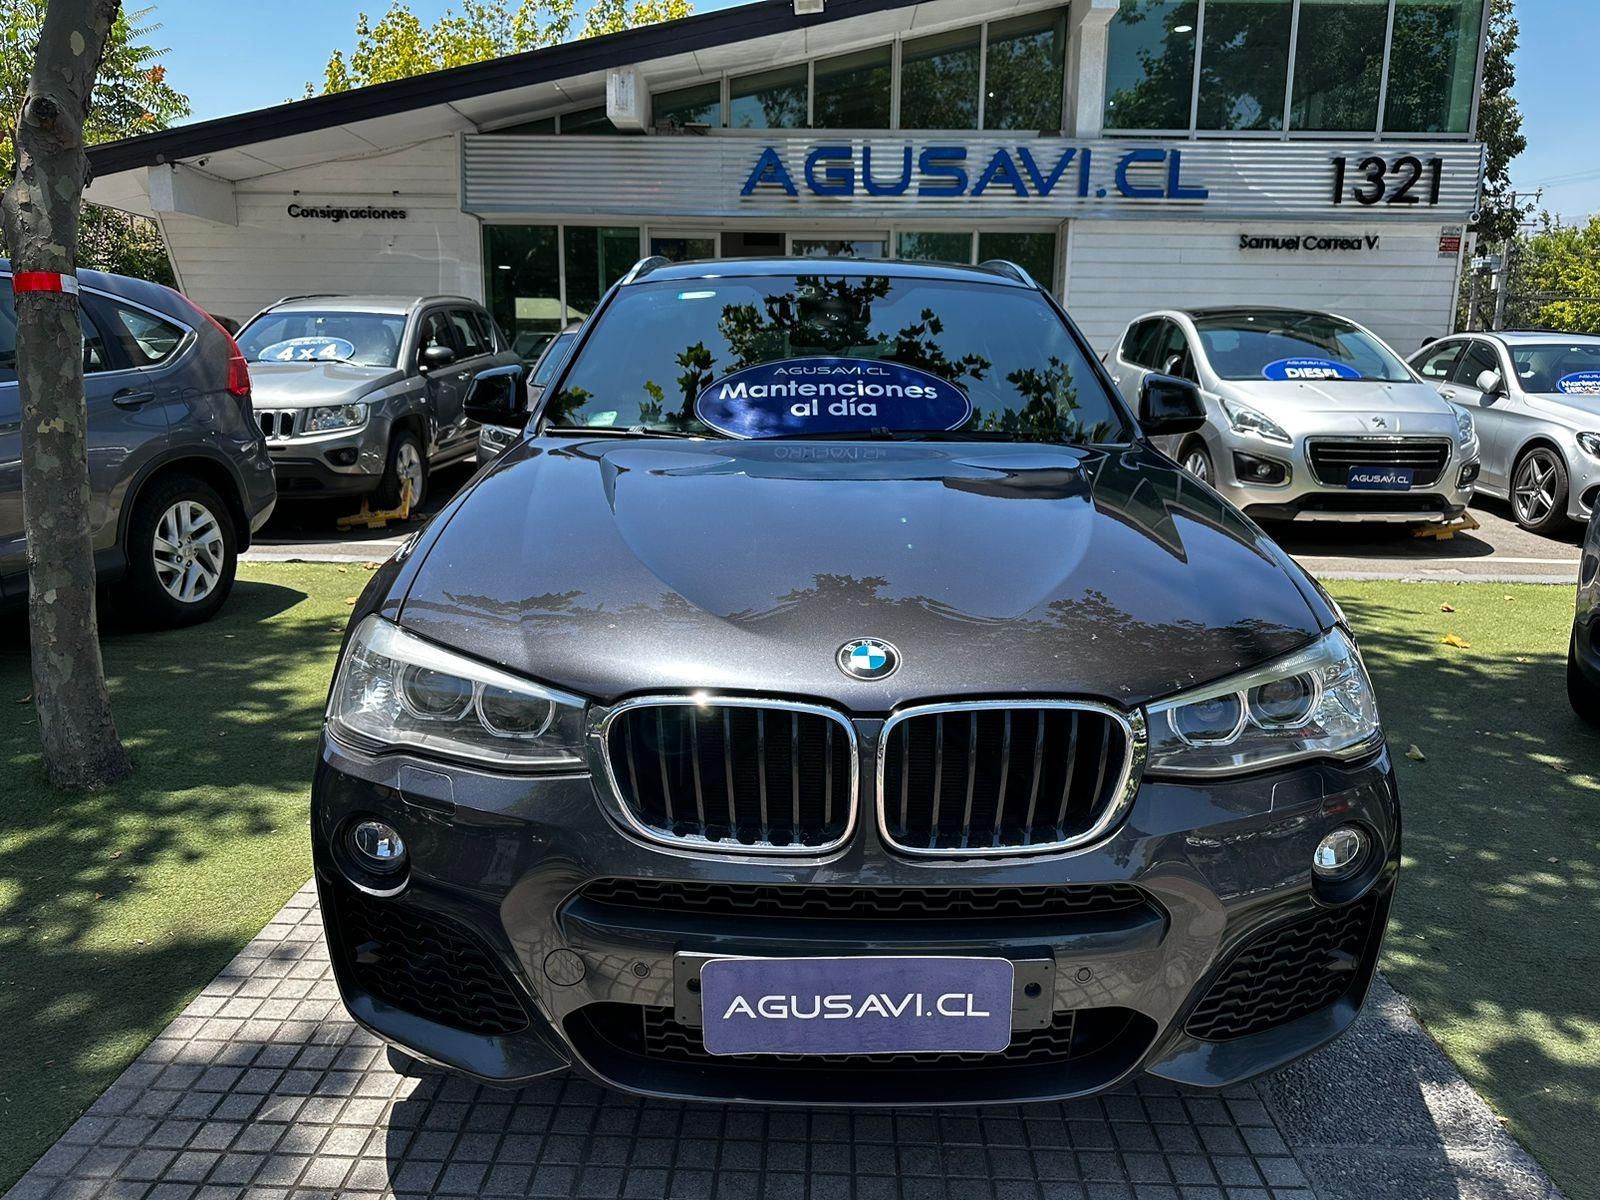 BMW X4 2.0 XDrive20I A M Sport  2018 CON MANTENCIONES - AGUSAVI